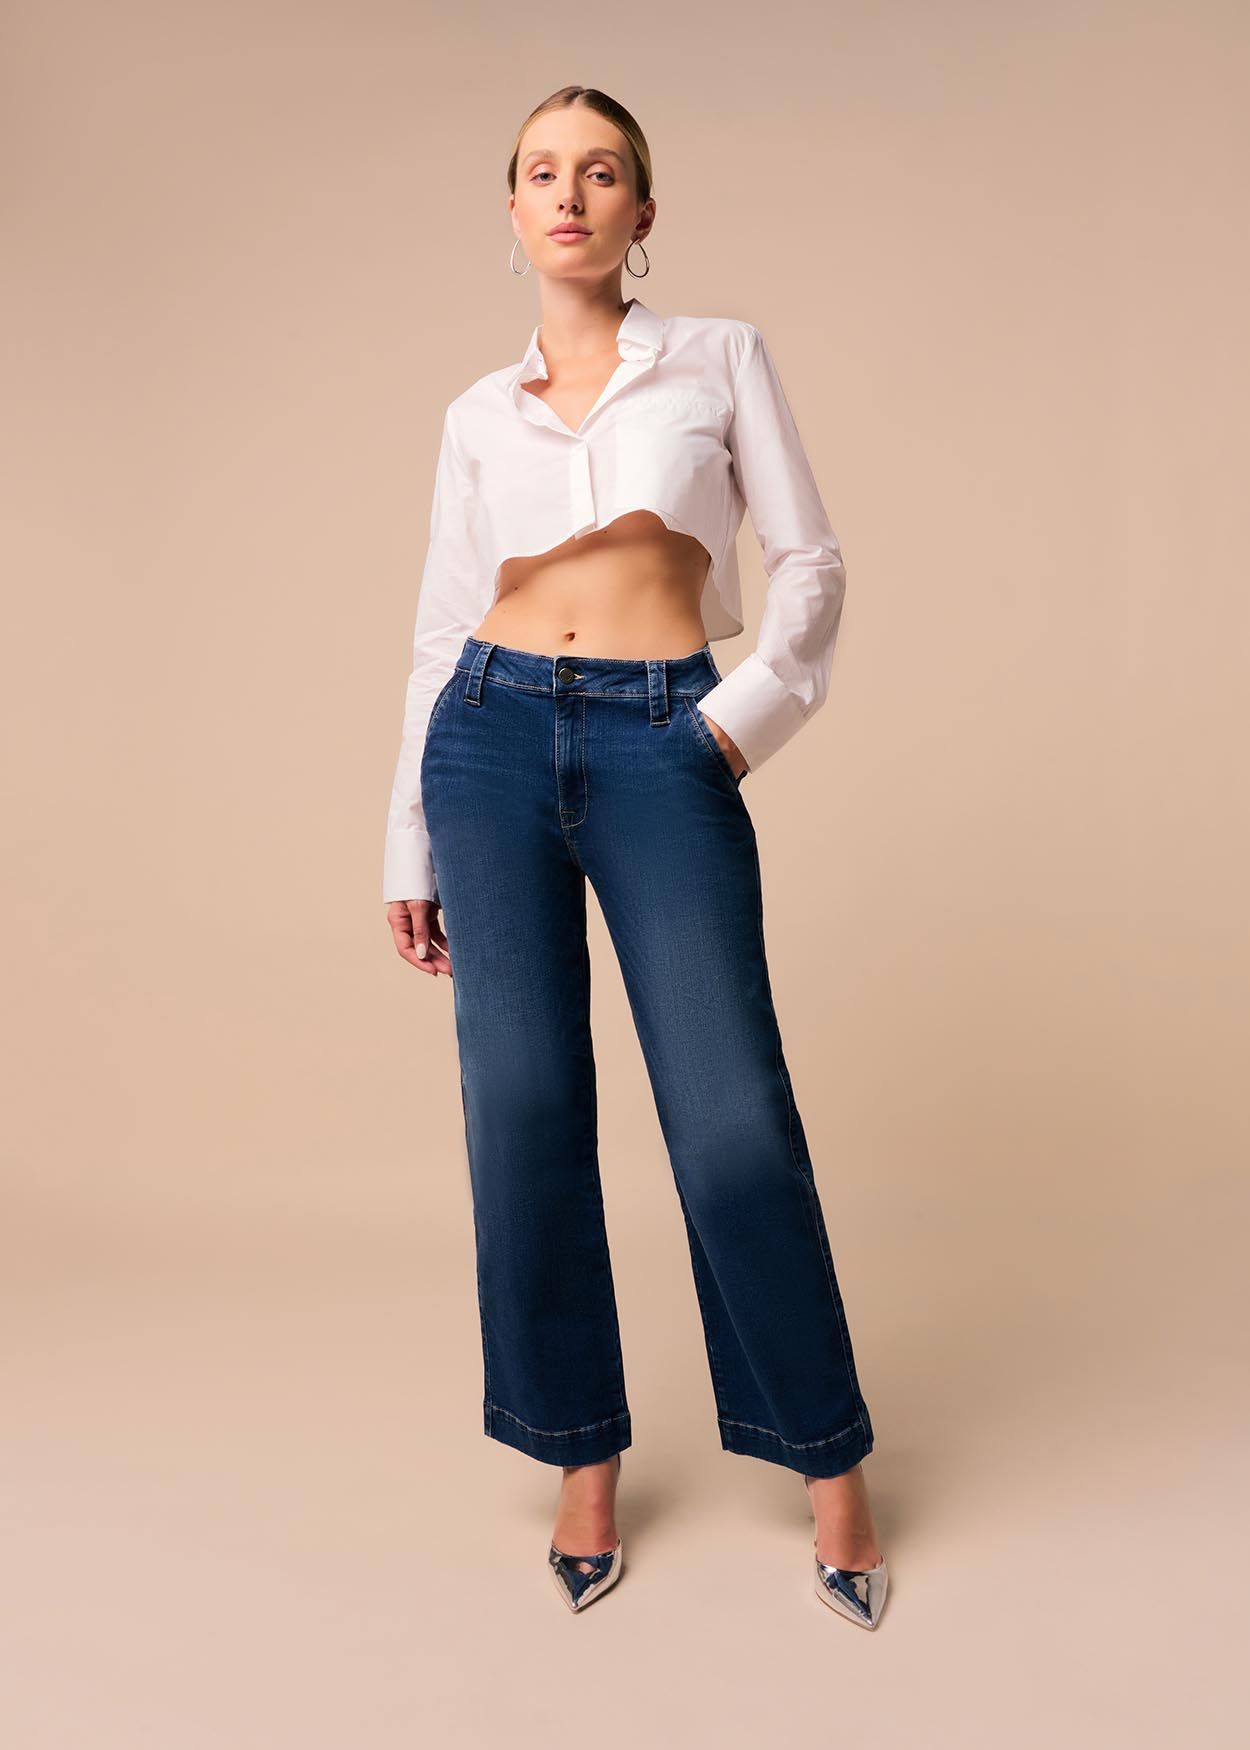 OLIVIA KYRA - Pantalon Chino |Taille Moyenne- Jambe Ample Droite | Taille en pouces